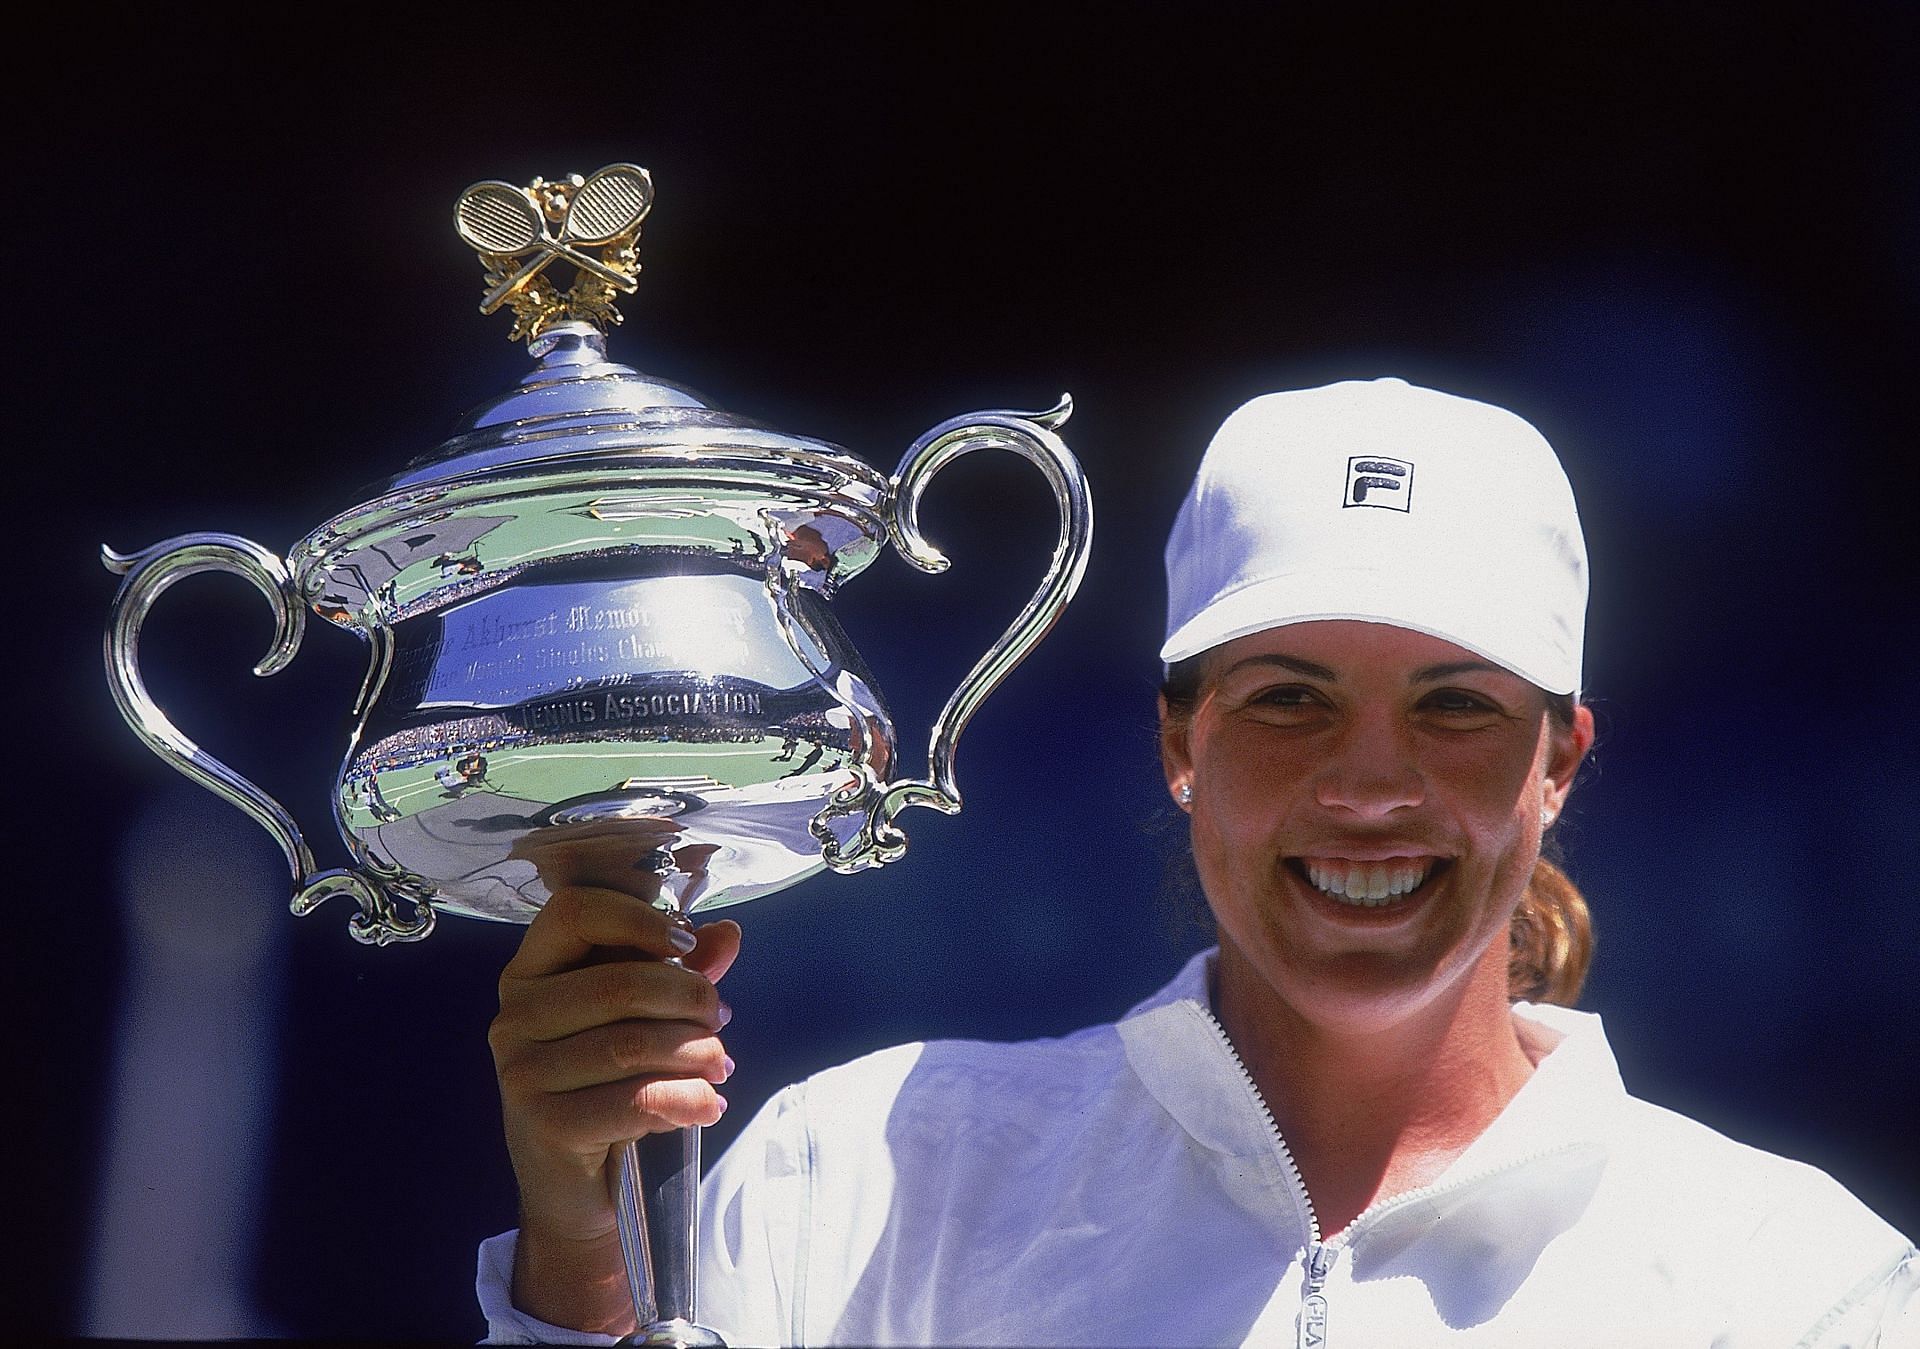 Jennifer Capriati pictured with the 2001 Australian Open trophy